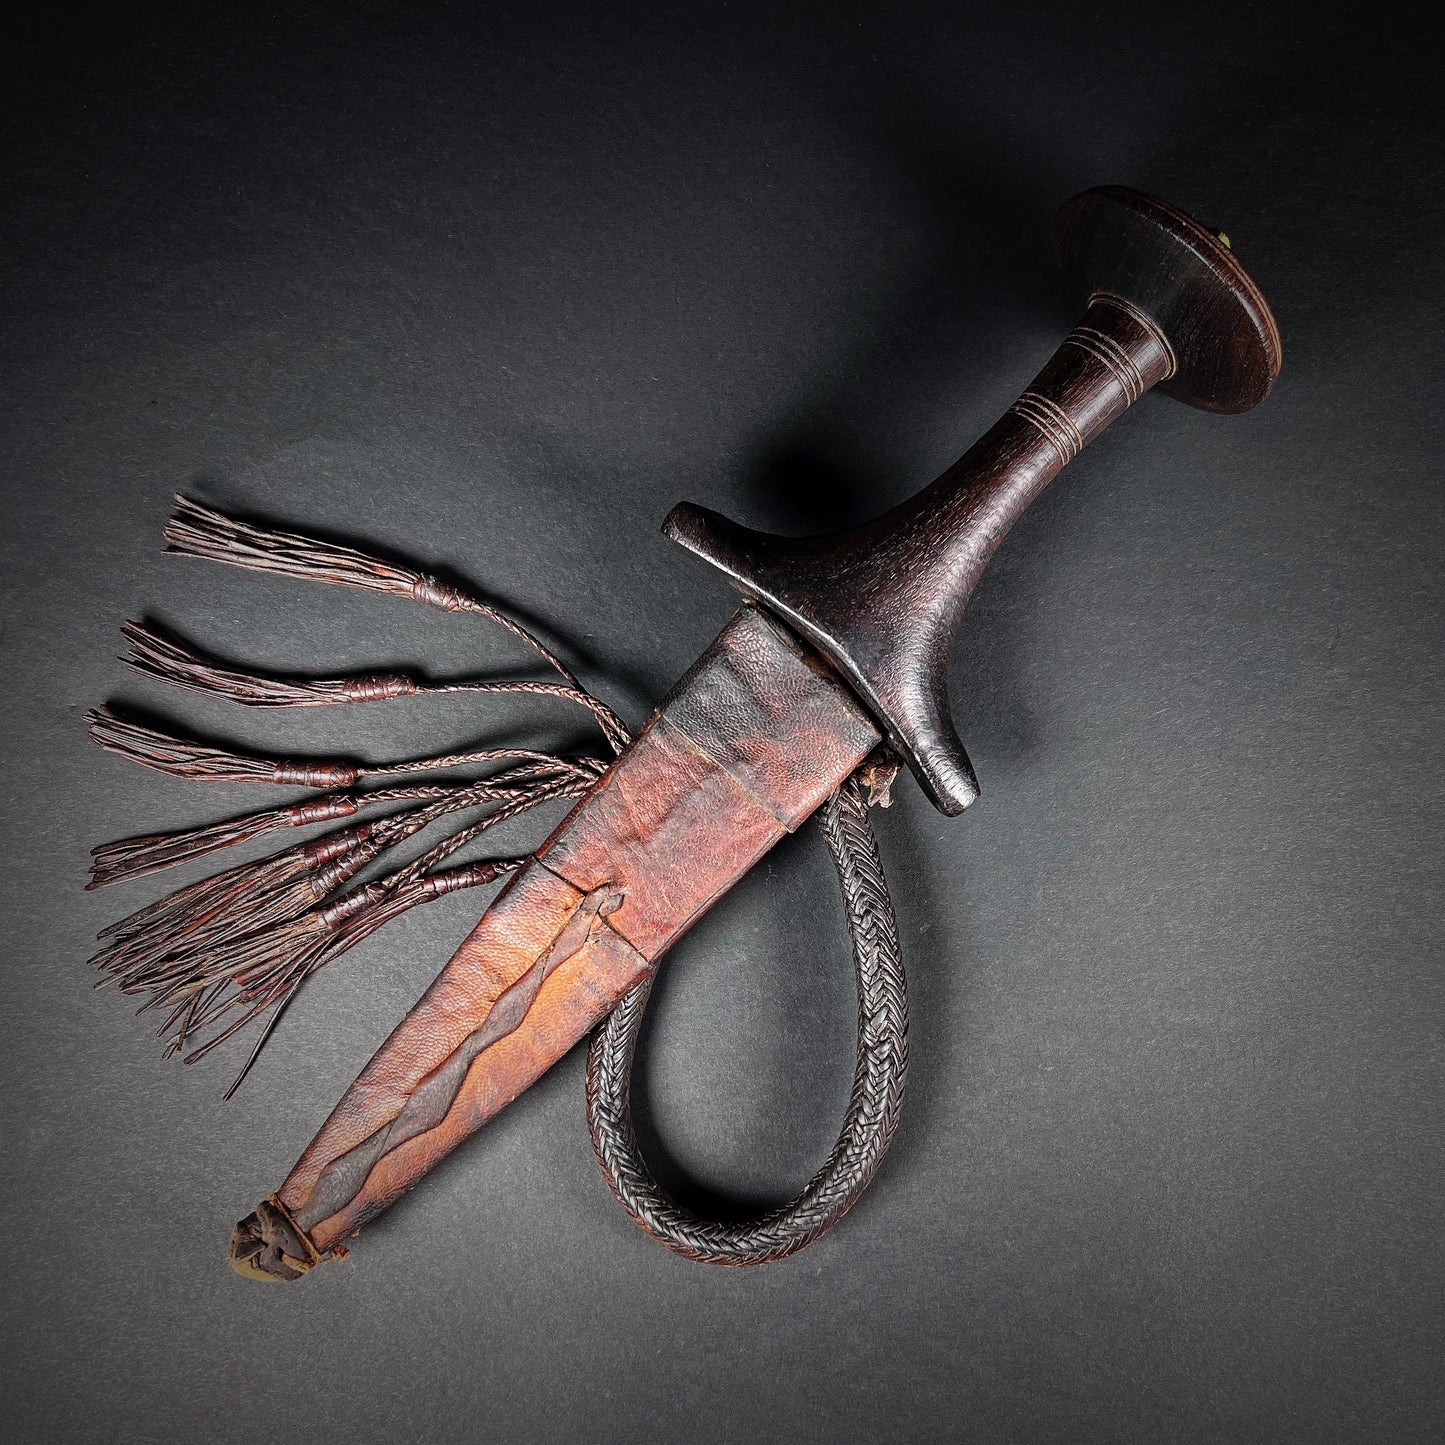 Sudanese Nuba or Fur Arm Dagger with Scabbard